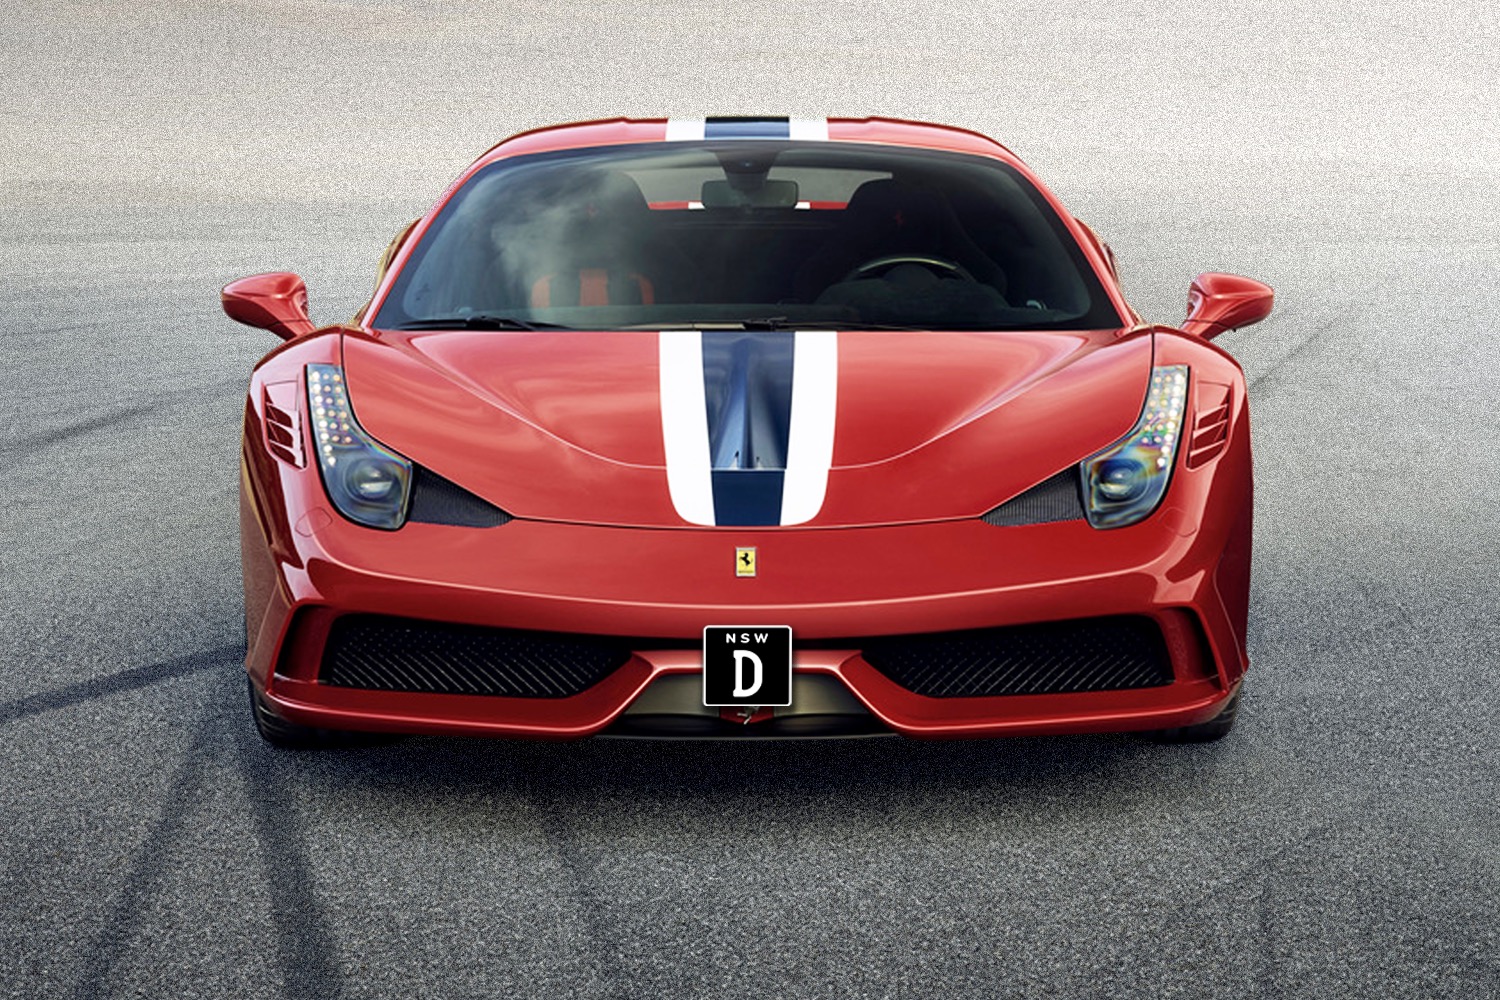 A Ferrari with a 'D' license plate.